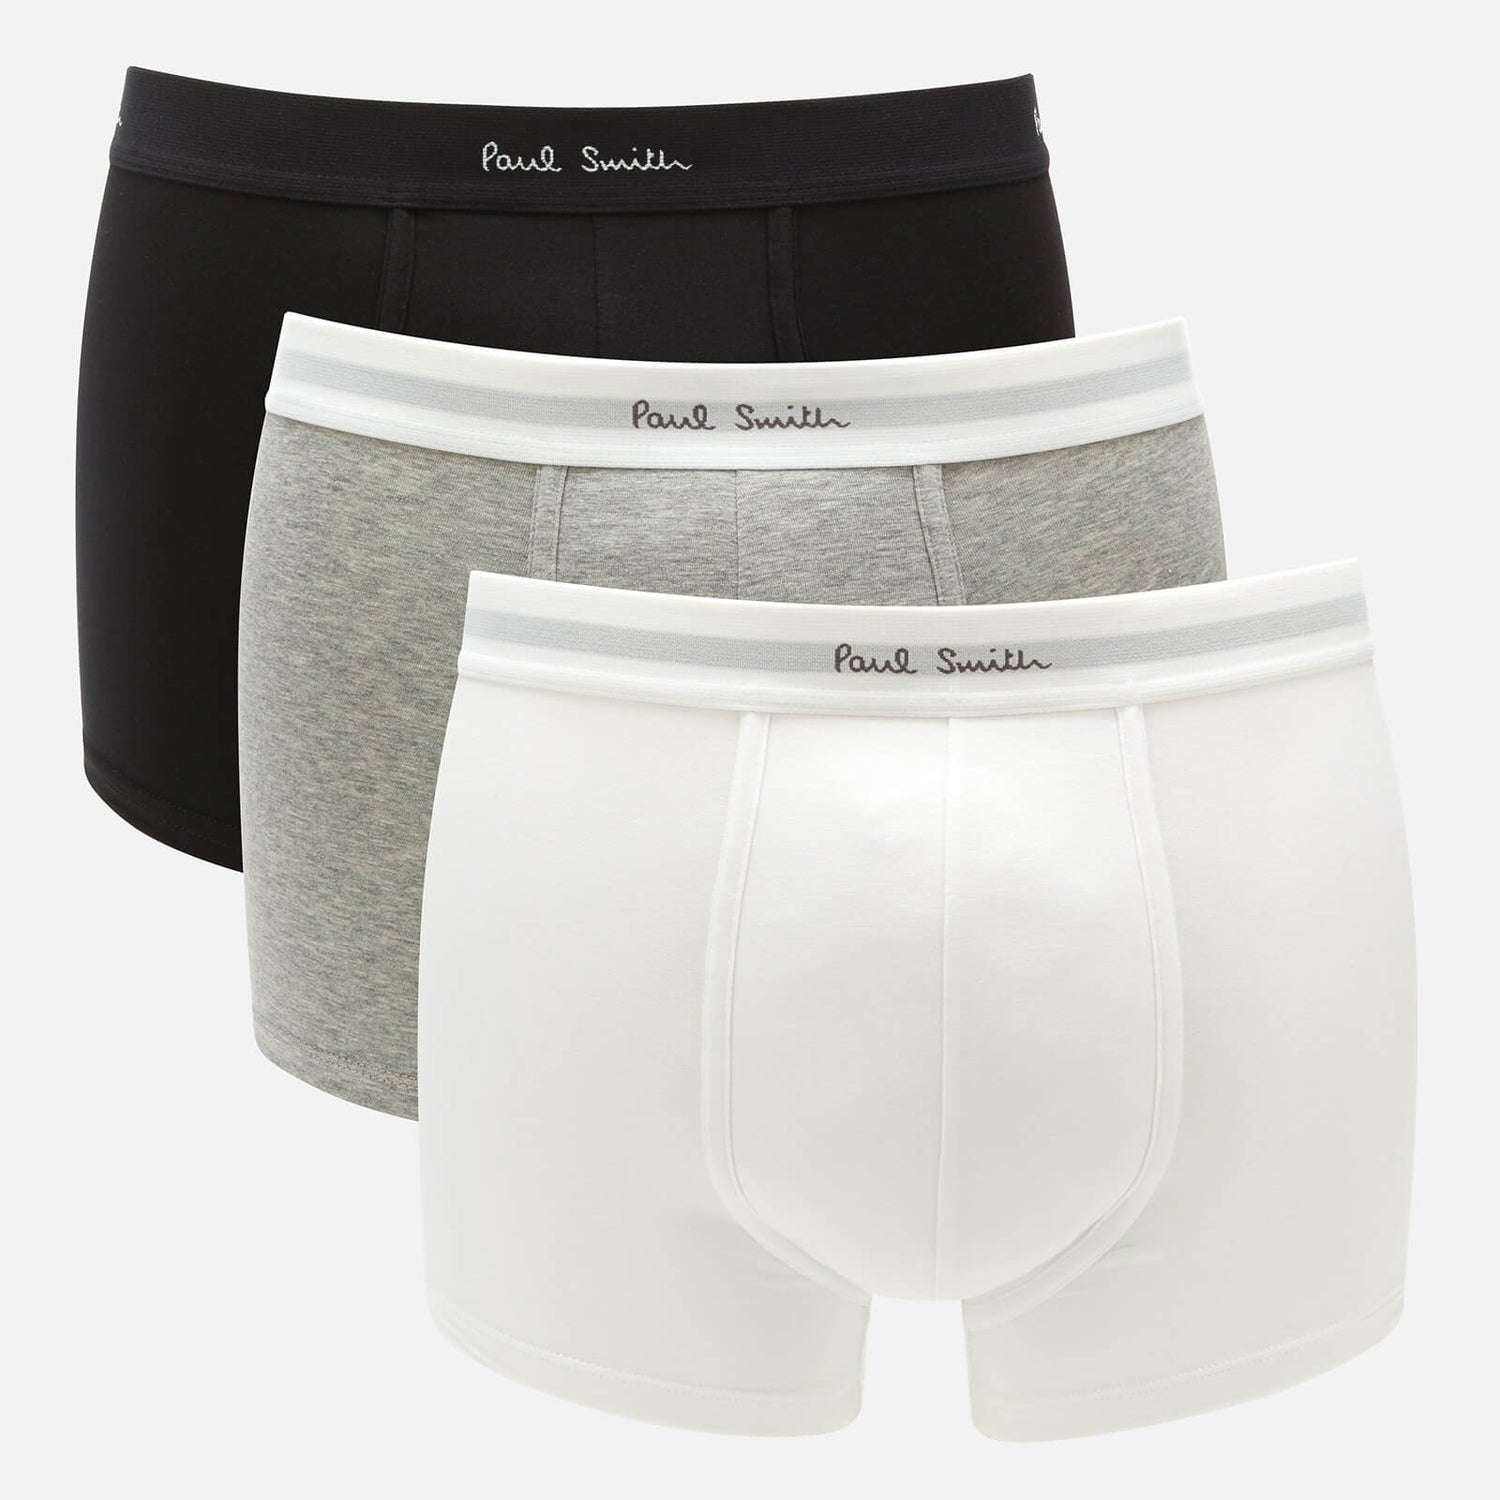 PS Paul Smith Men's 3-Pack Trunk Boxer Shorts - White/Grey/Black - S